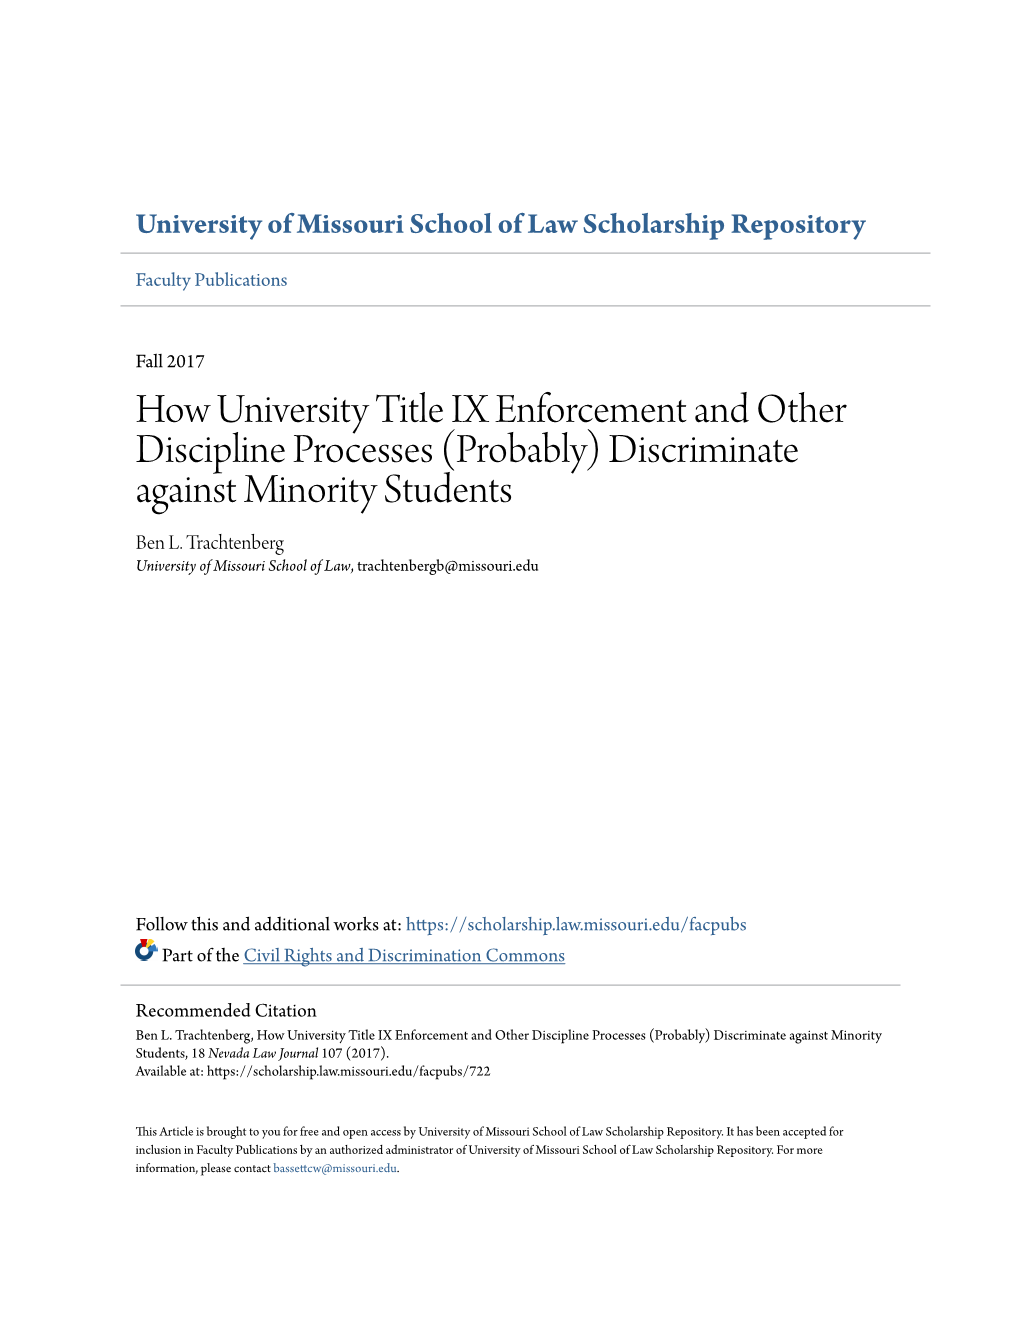 How University Title IX Enforcement and Other Discipline Processes (Probably) Discriminate Against Minority Students Ben L